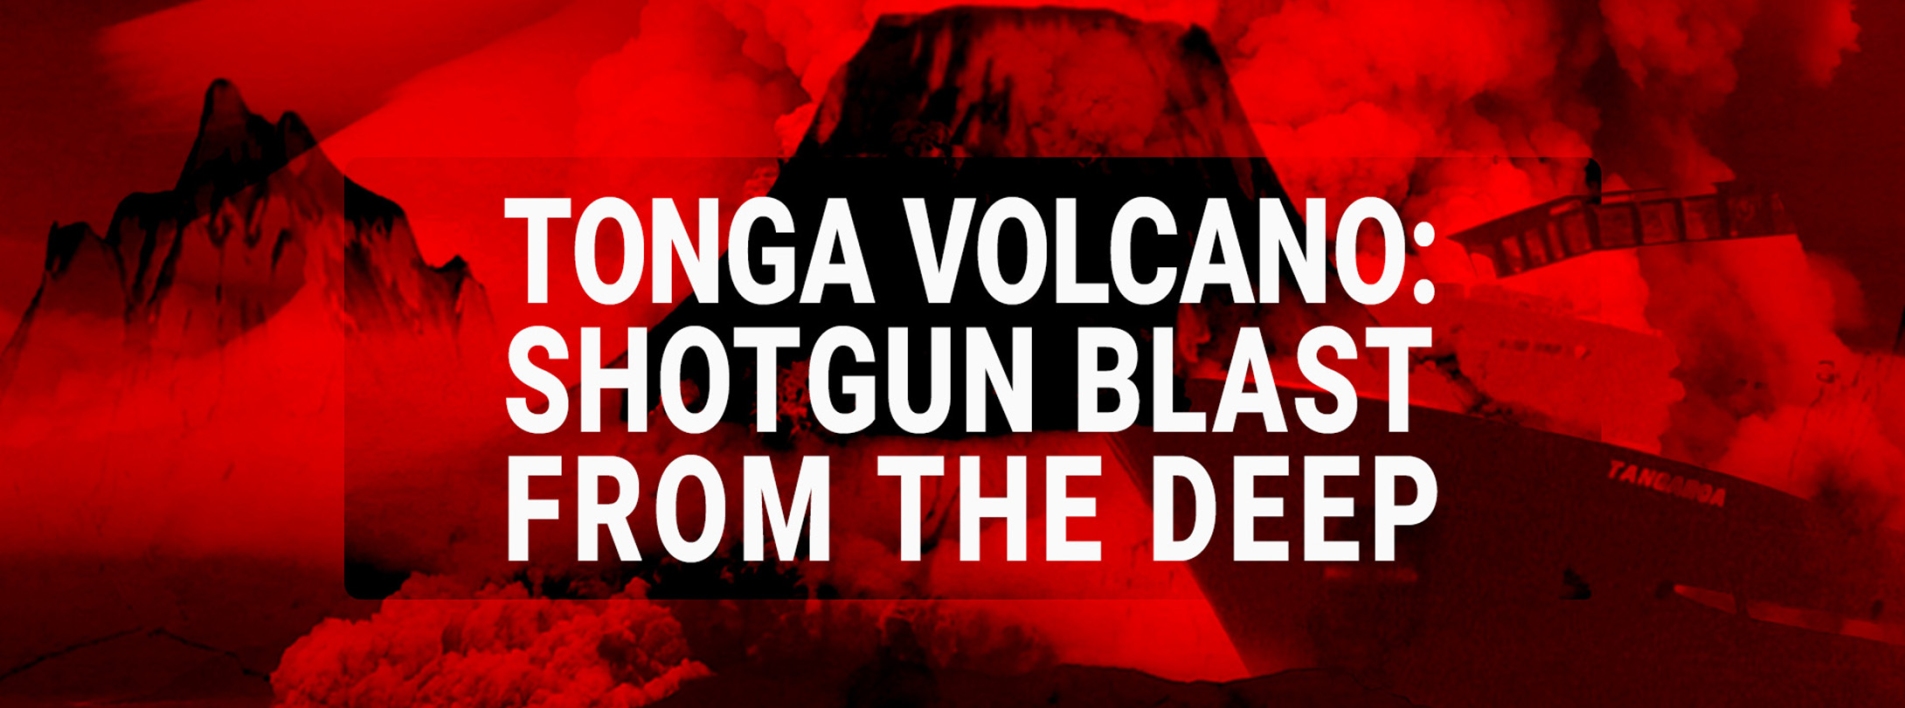 Tonga Eruption